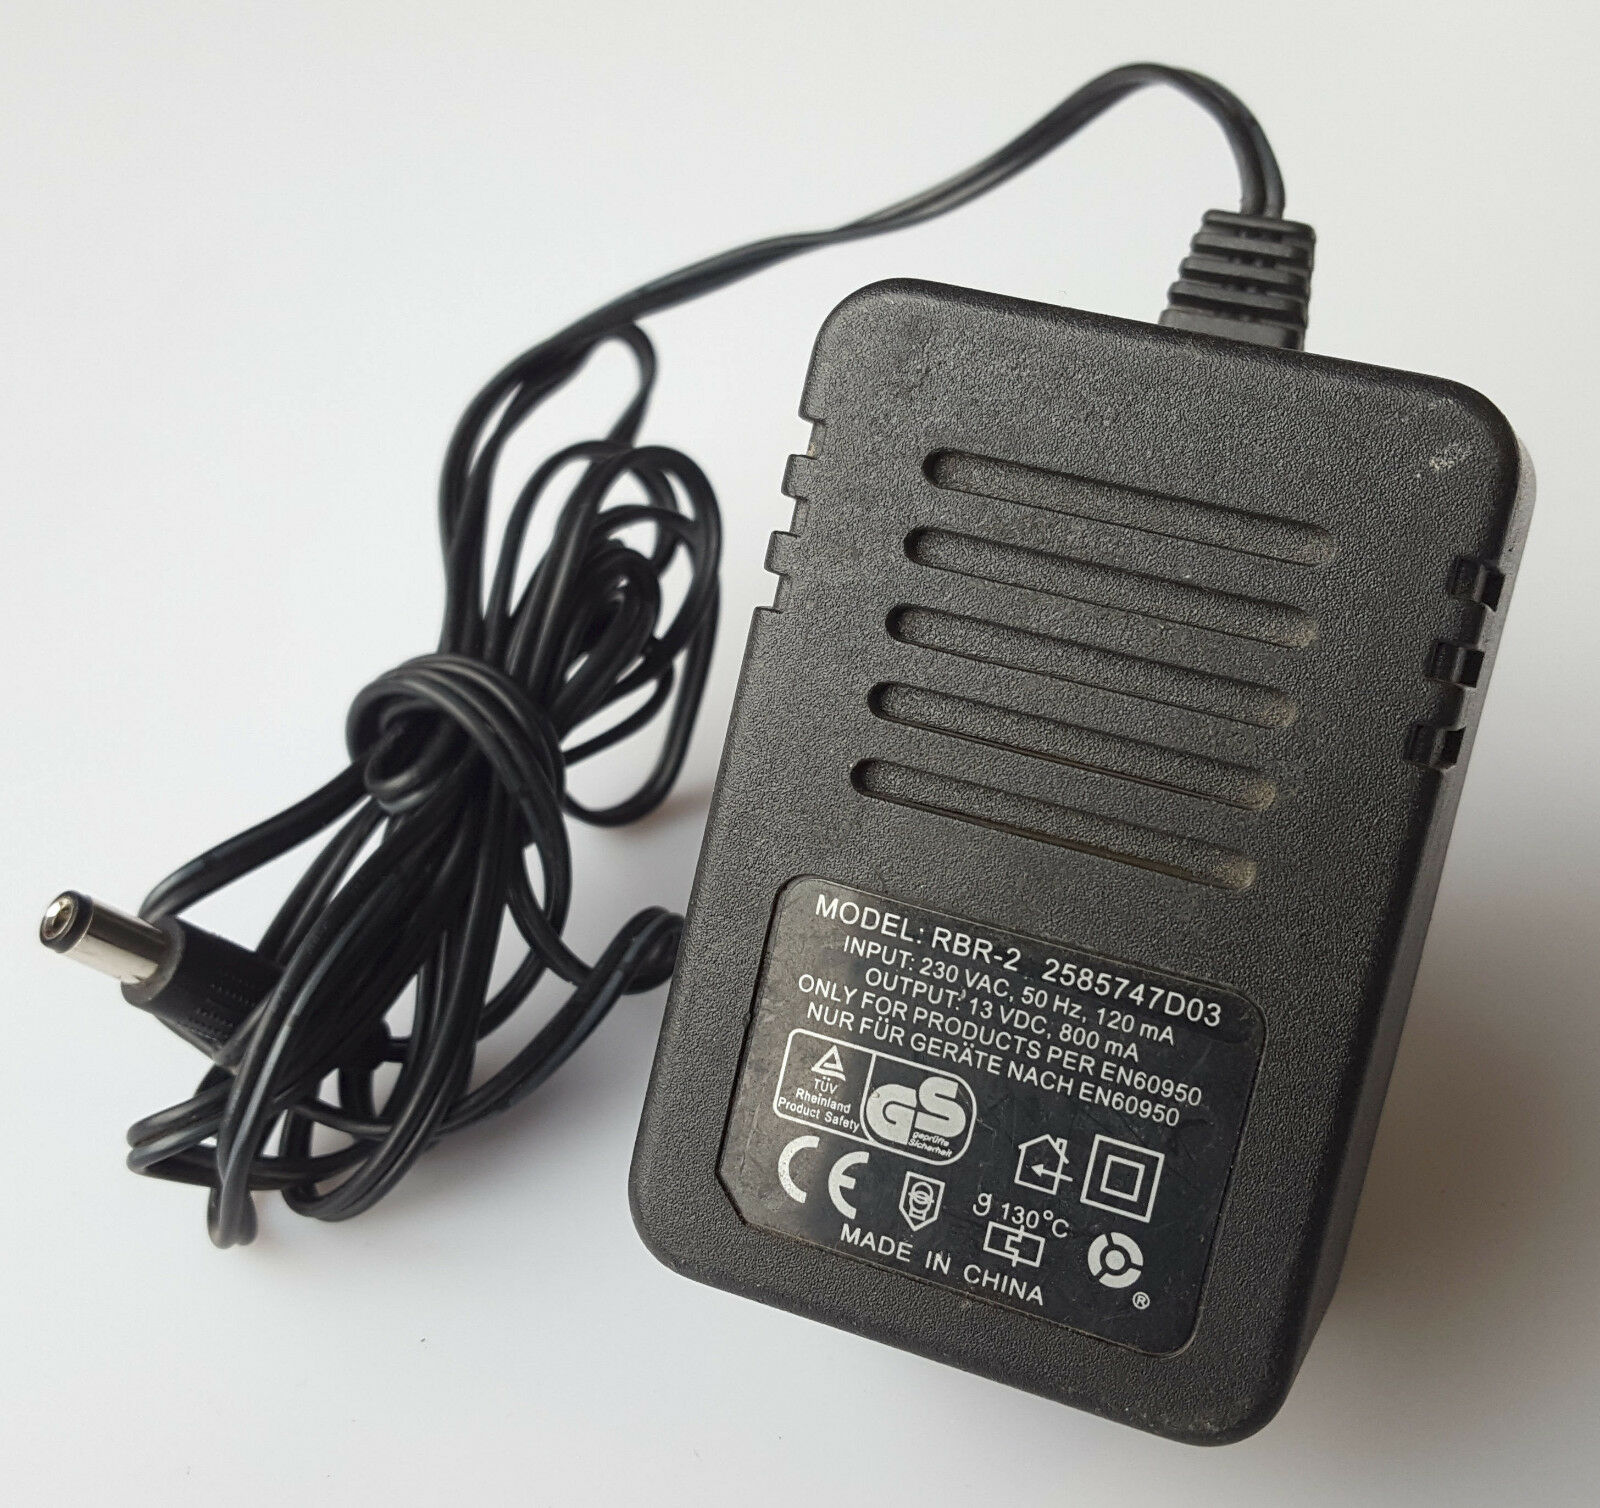 New 13V 800mA RBR-2 2585747D03 Power Supply Ac Adapter